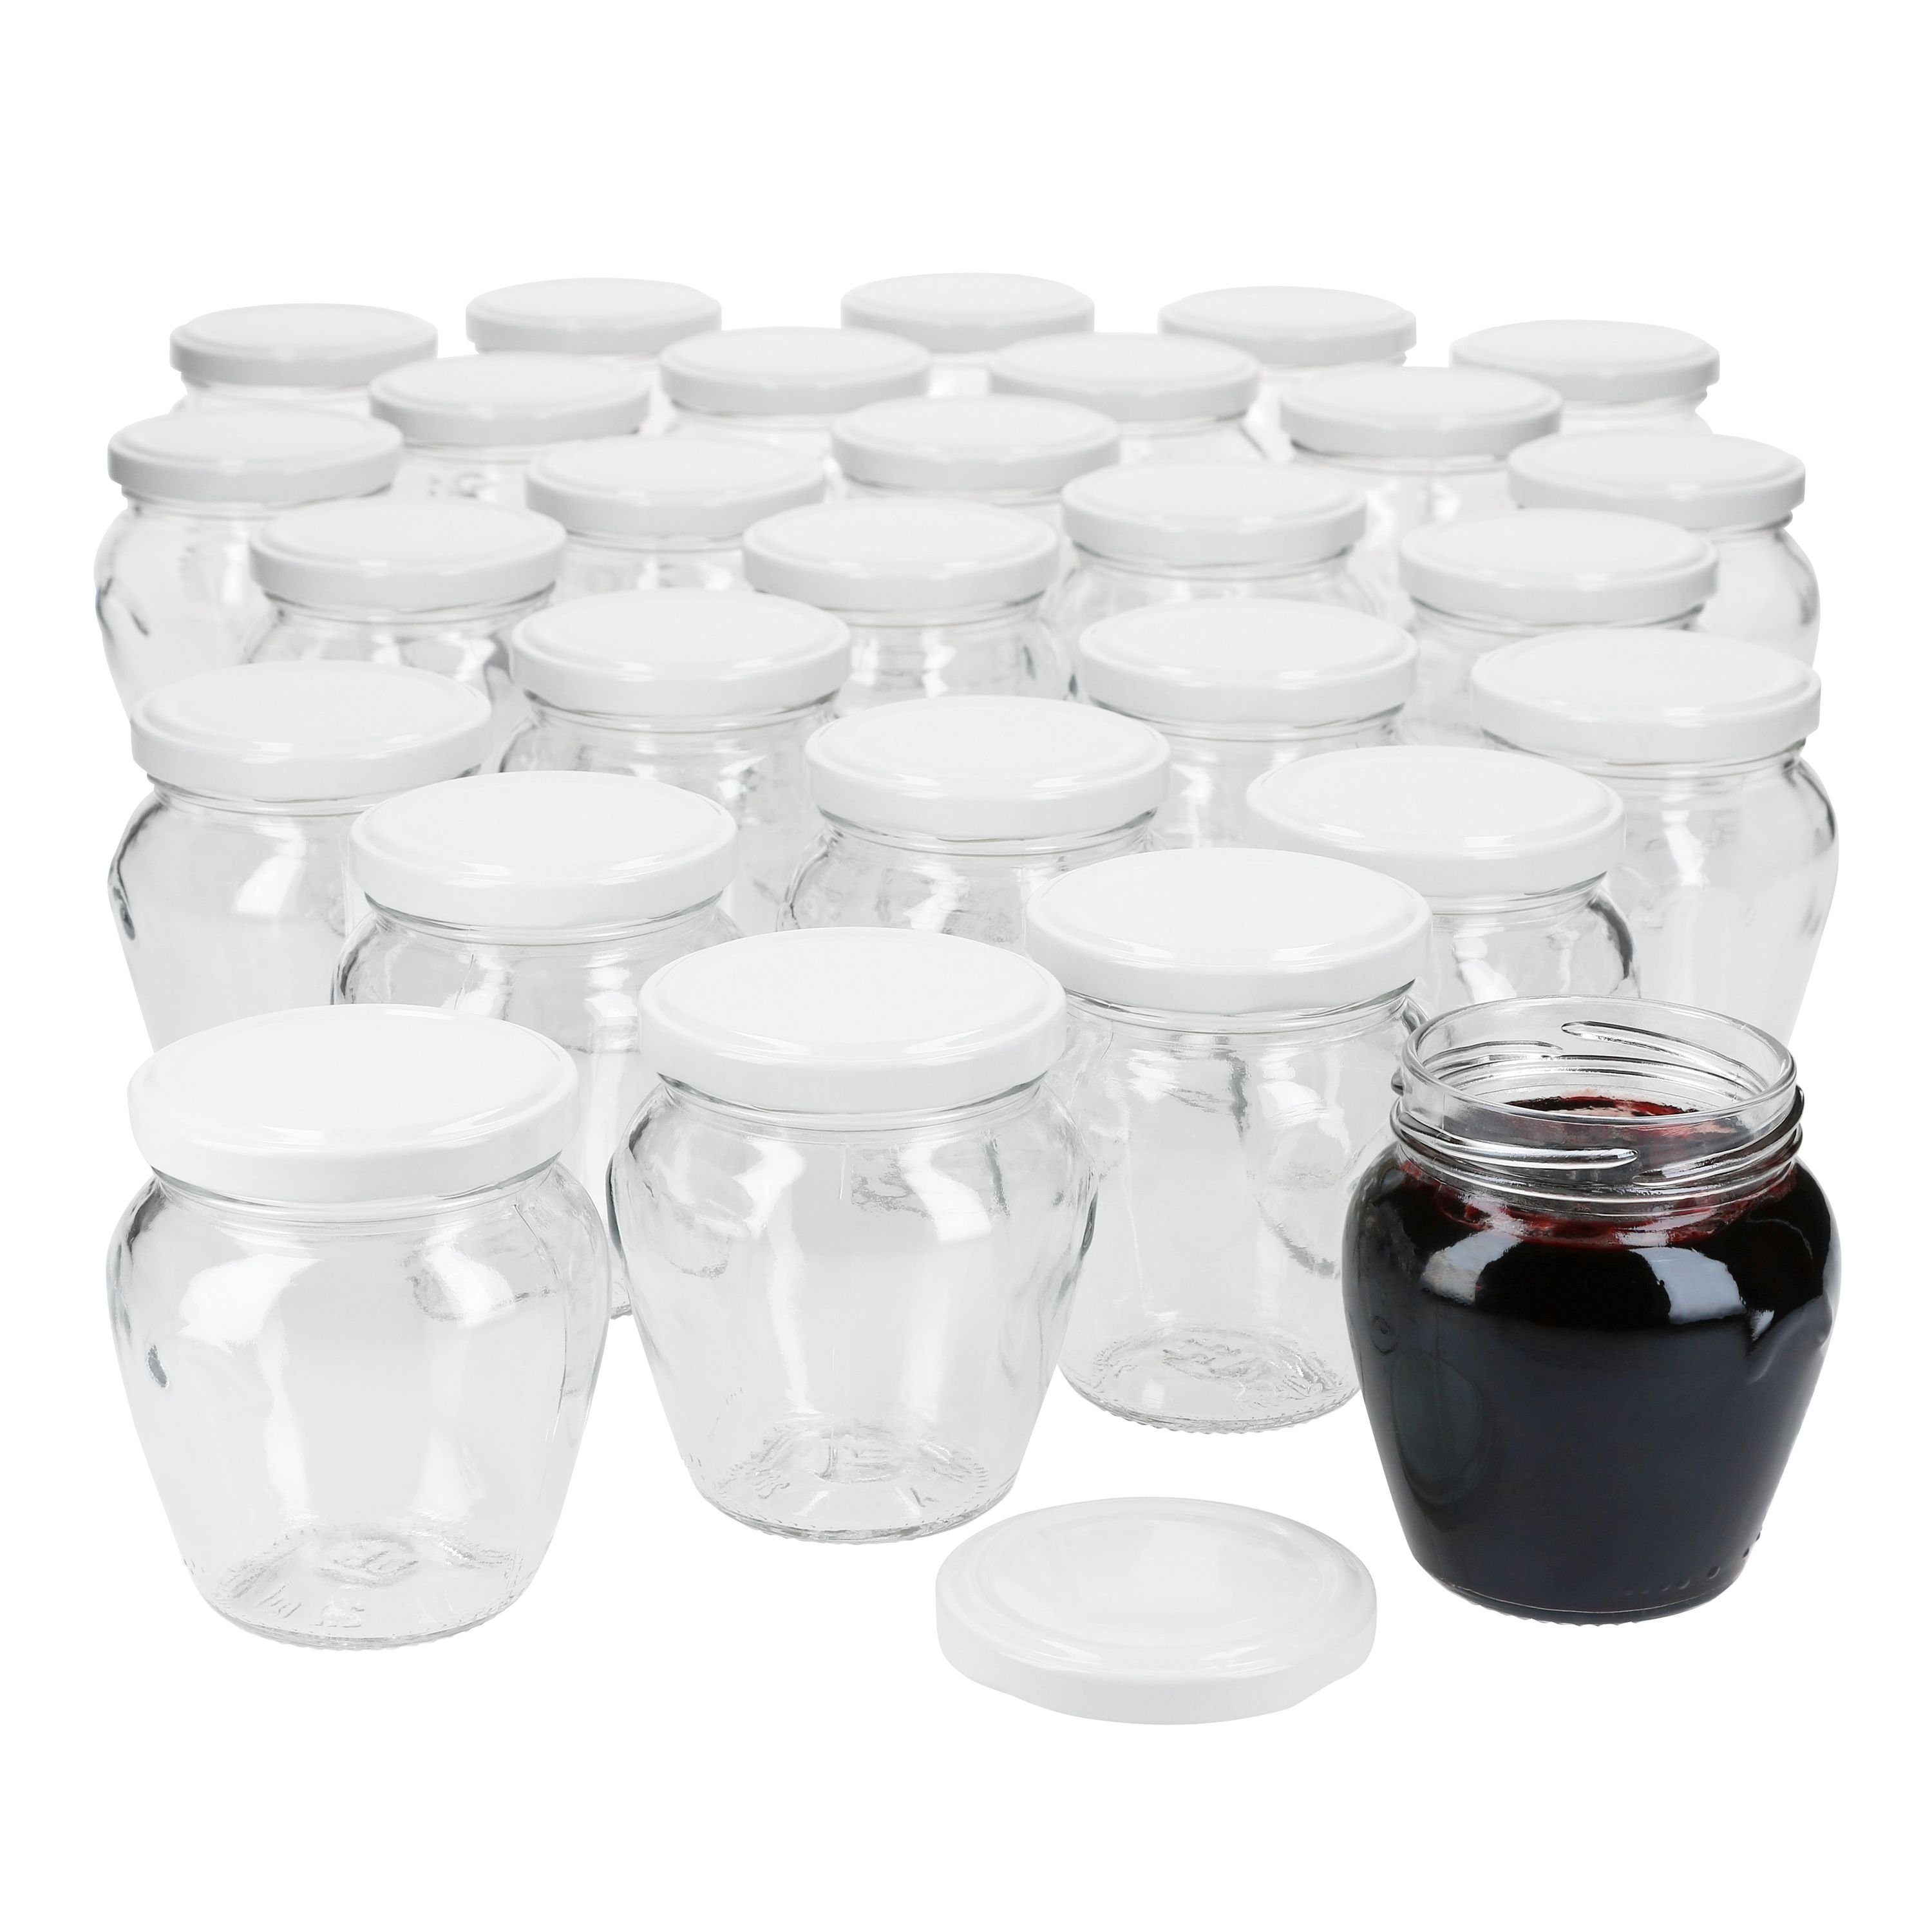 Set 75er Glas MamboCat 212ml To63 weiß, Vaso Orcio Einmachglas + Deckel Marmeladenglas